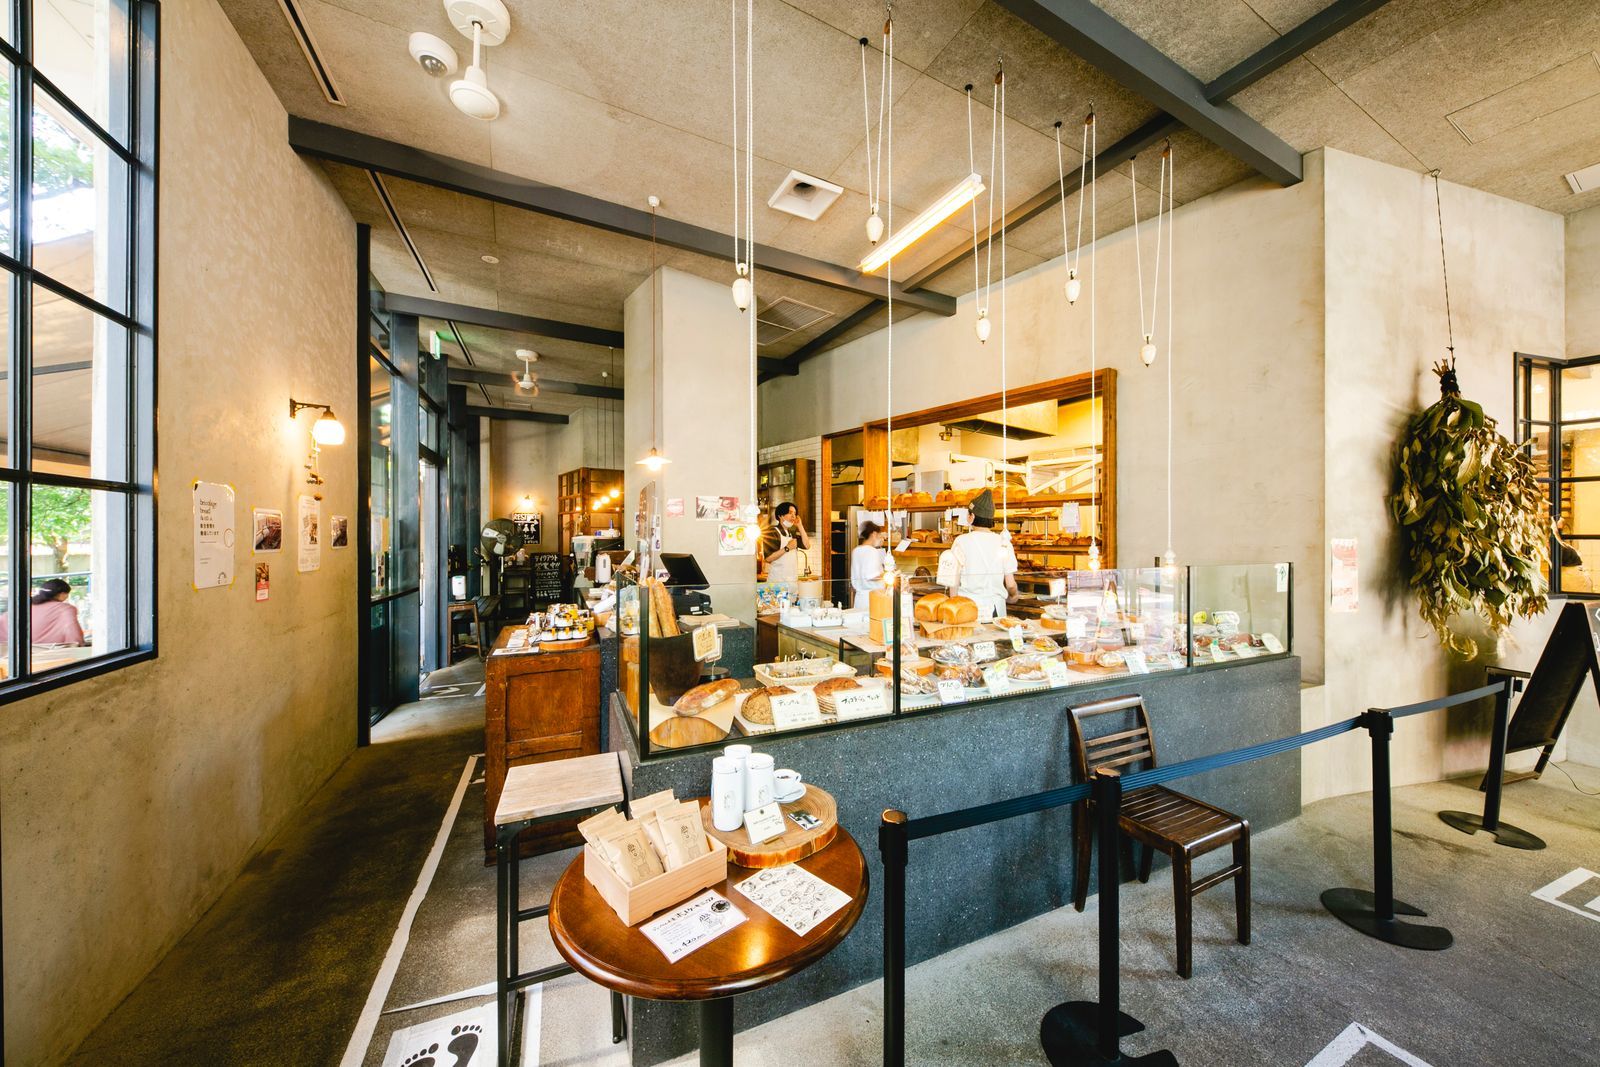 Bricolage Bread & Co  Restaurants in Roppongi, Tokyo